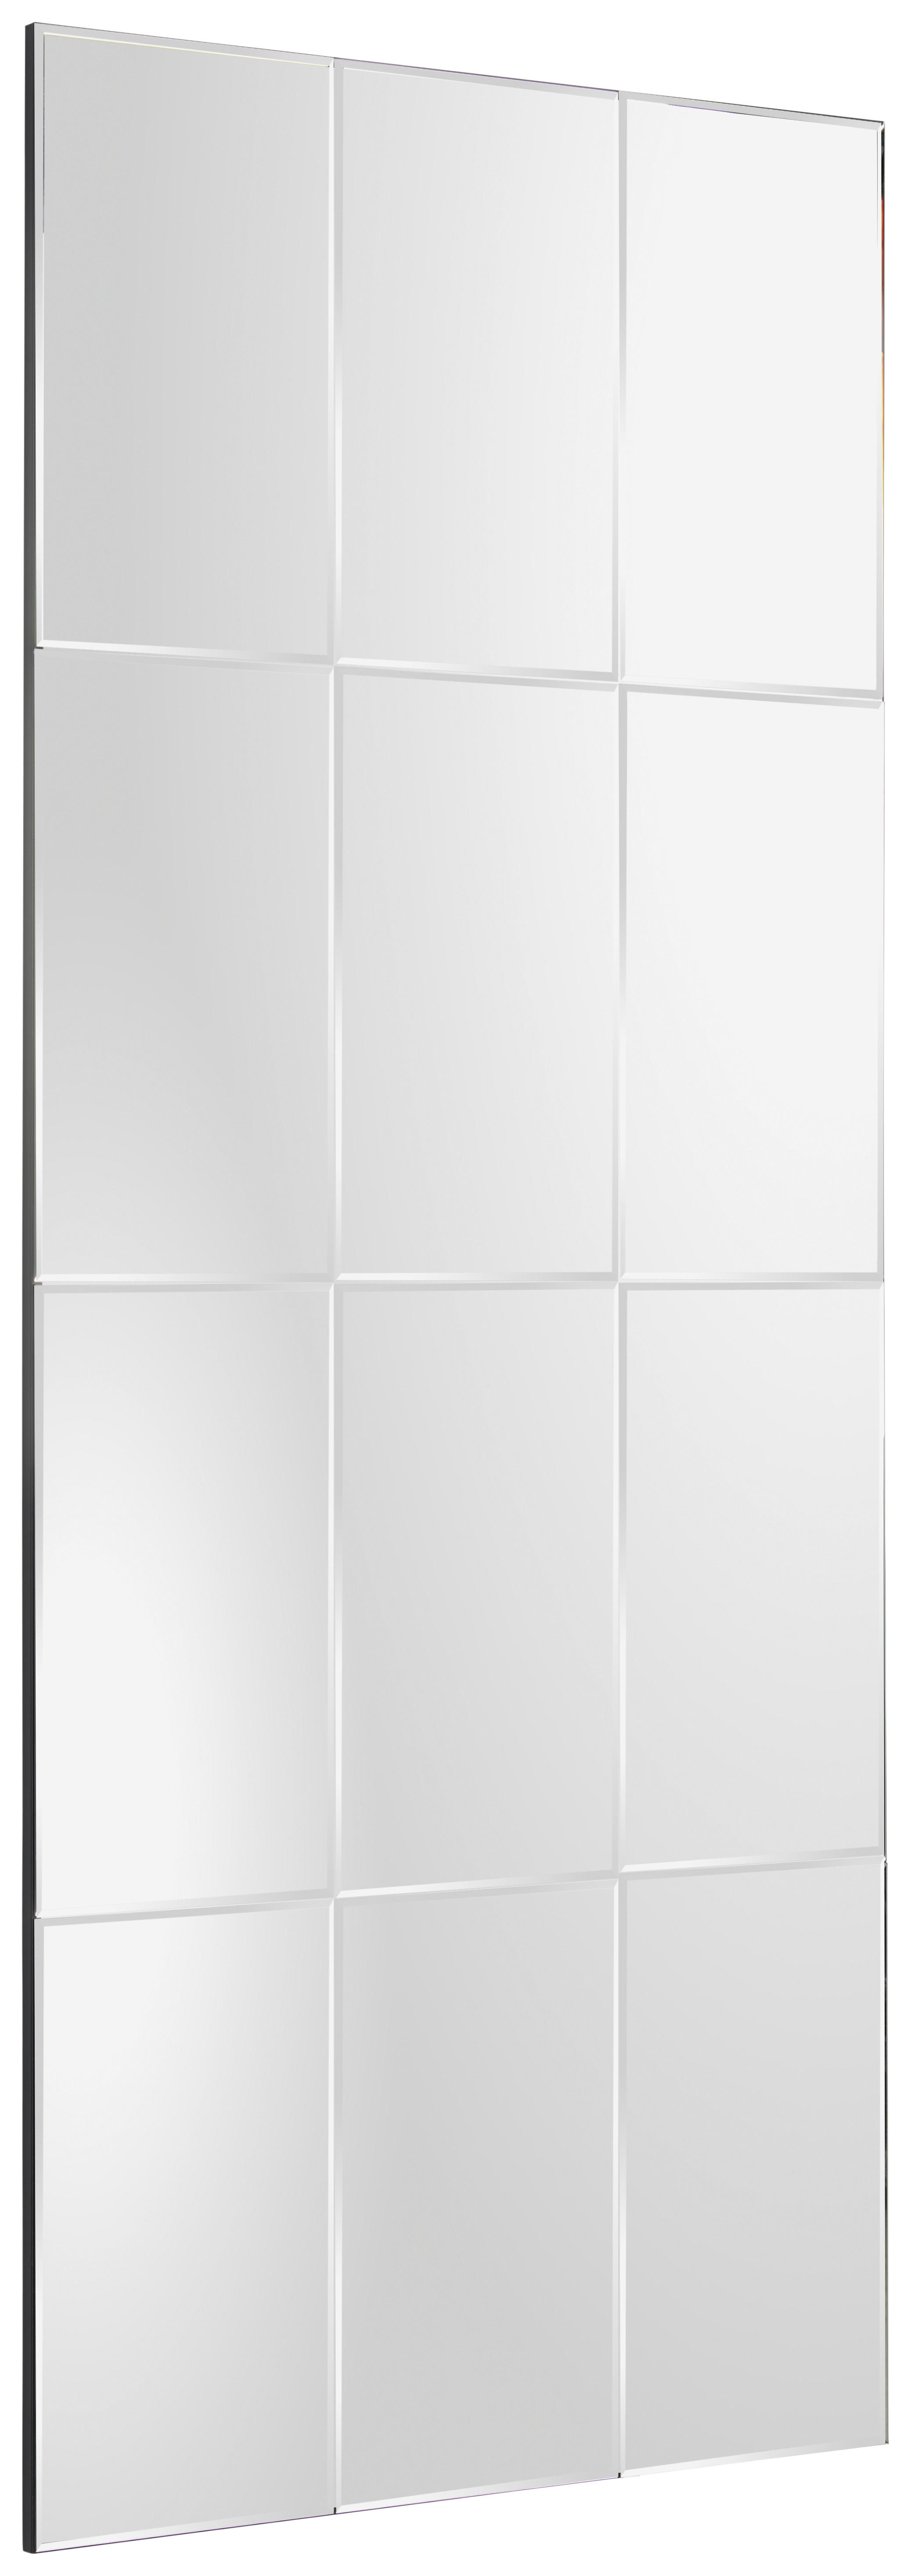 WANDSPIEGEL 66/160/1,5 cm    - Design, Glas (66/160/1,5cm) - Carryhome